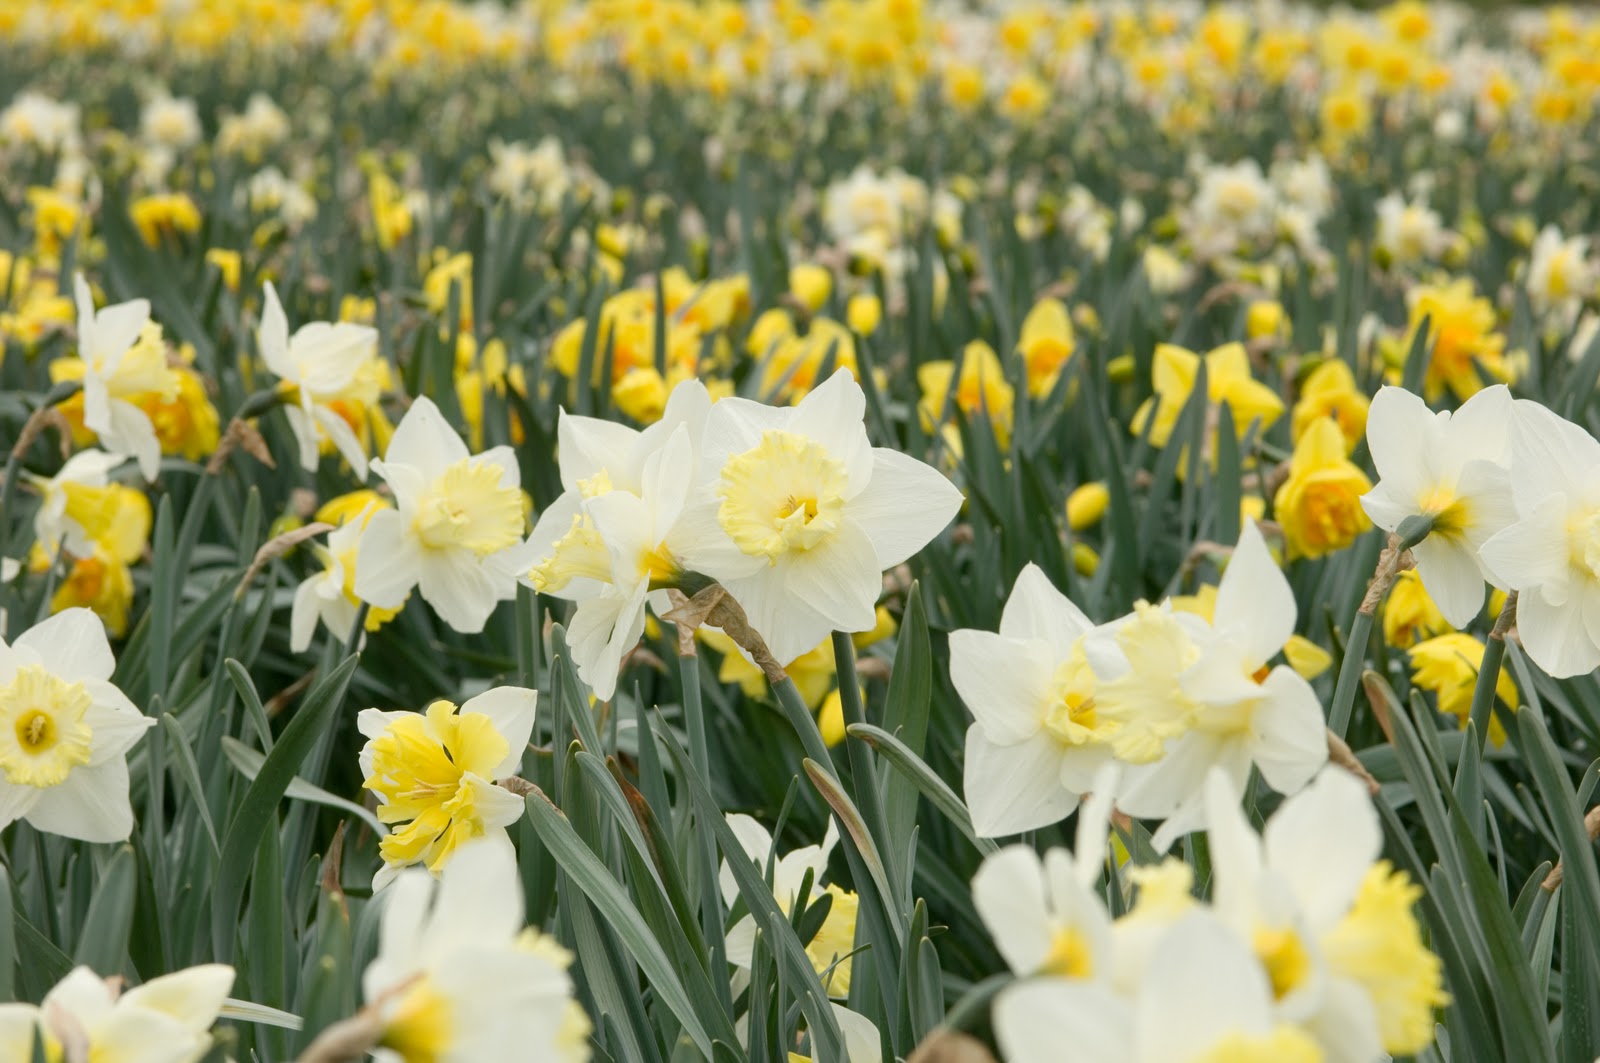 Enchanting Daffodil Field HD Wallpaper The Database